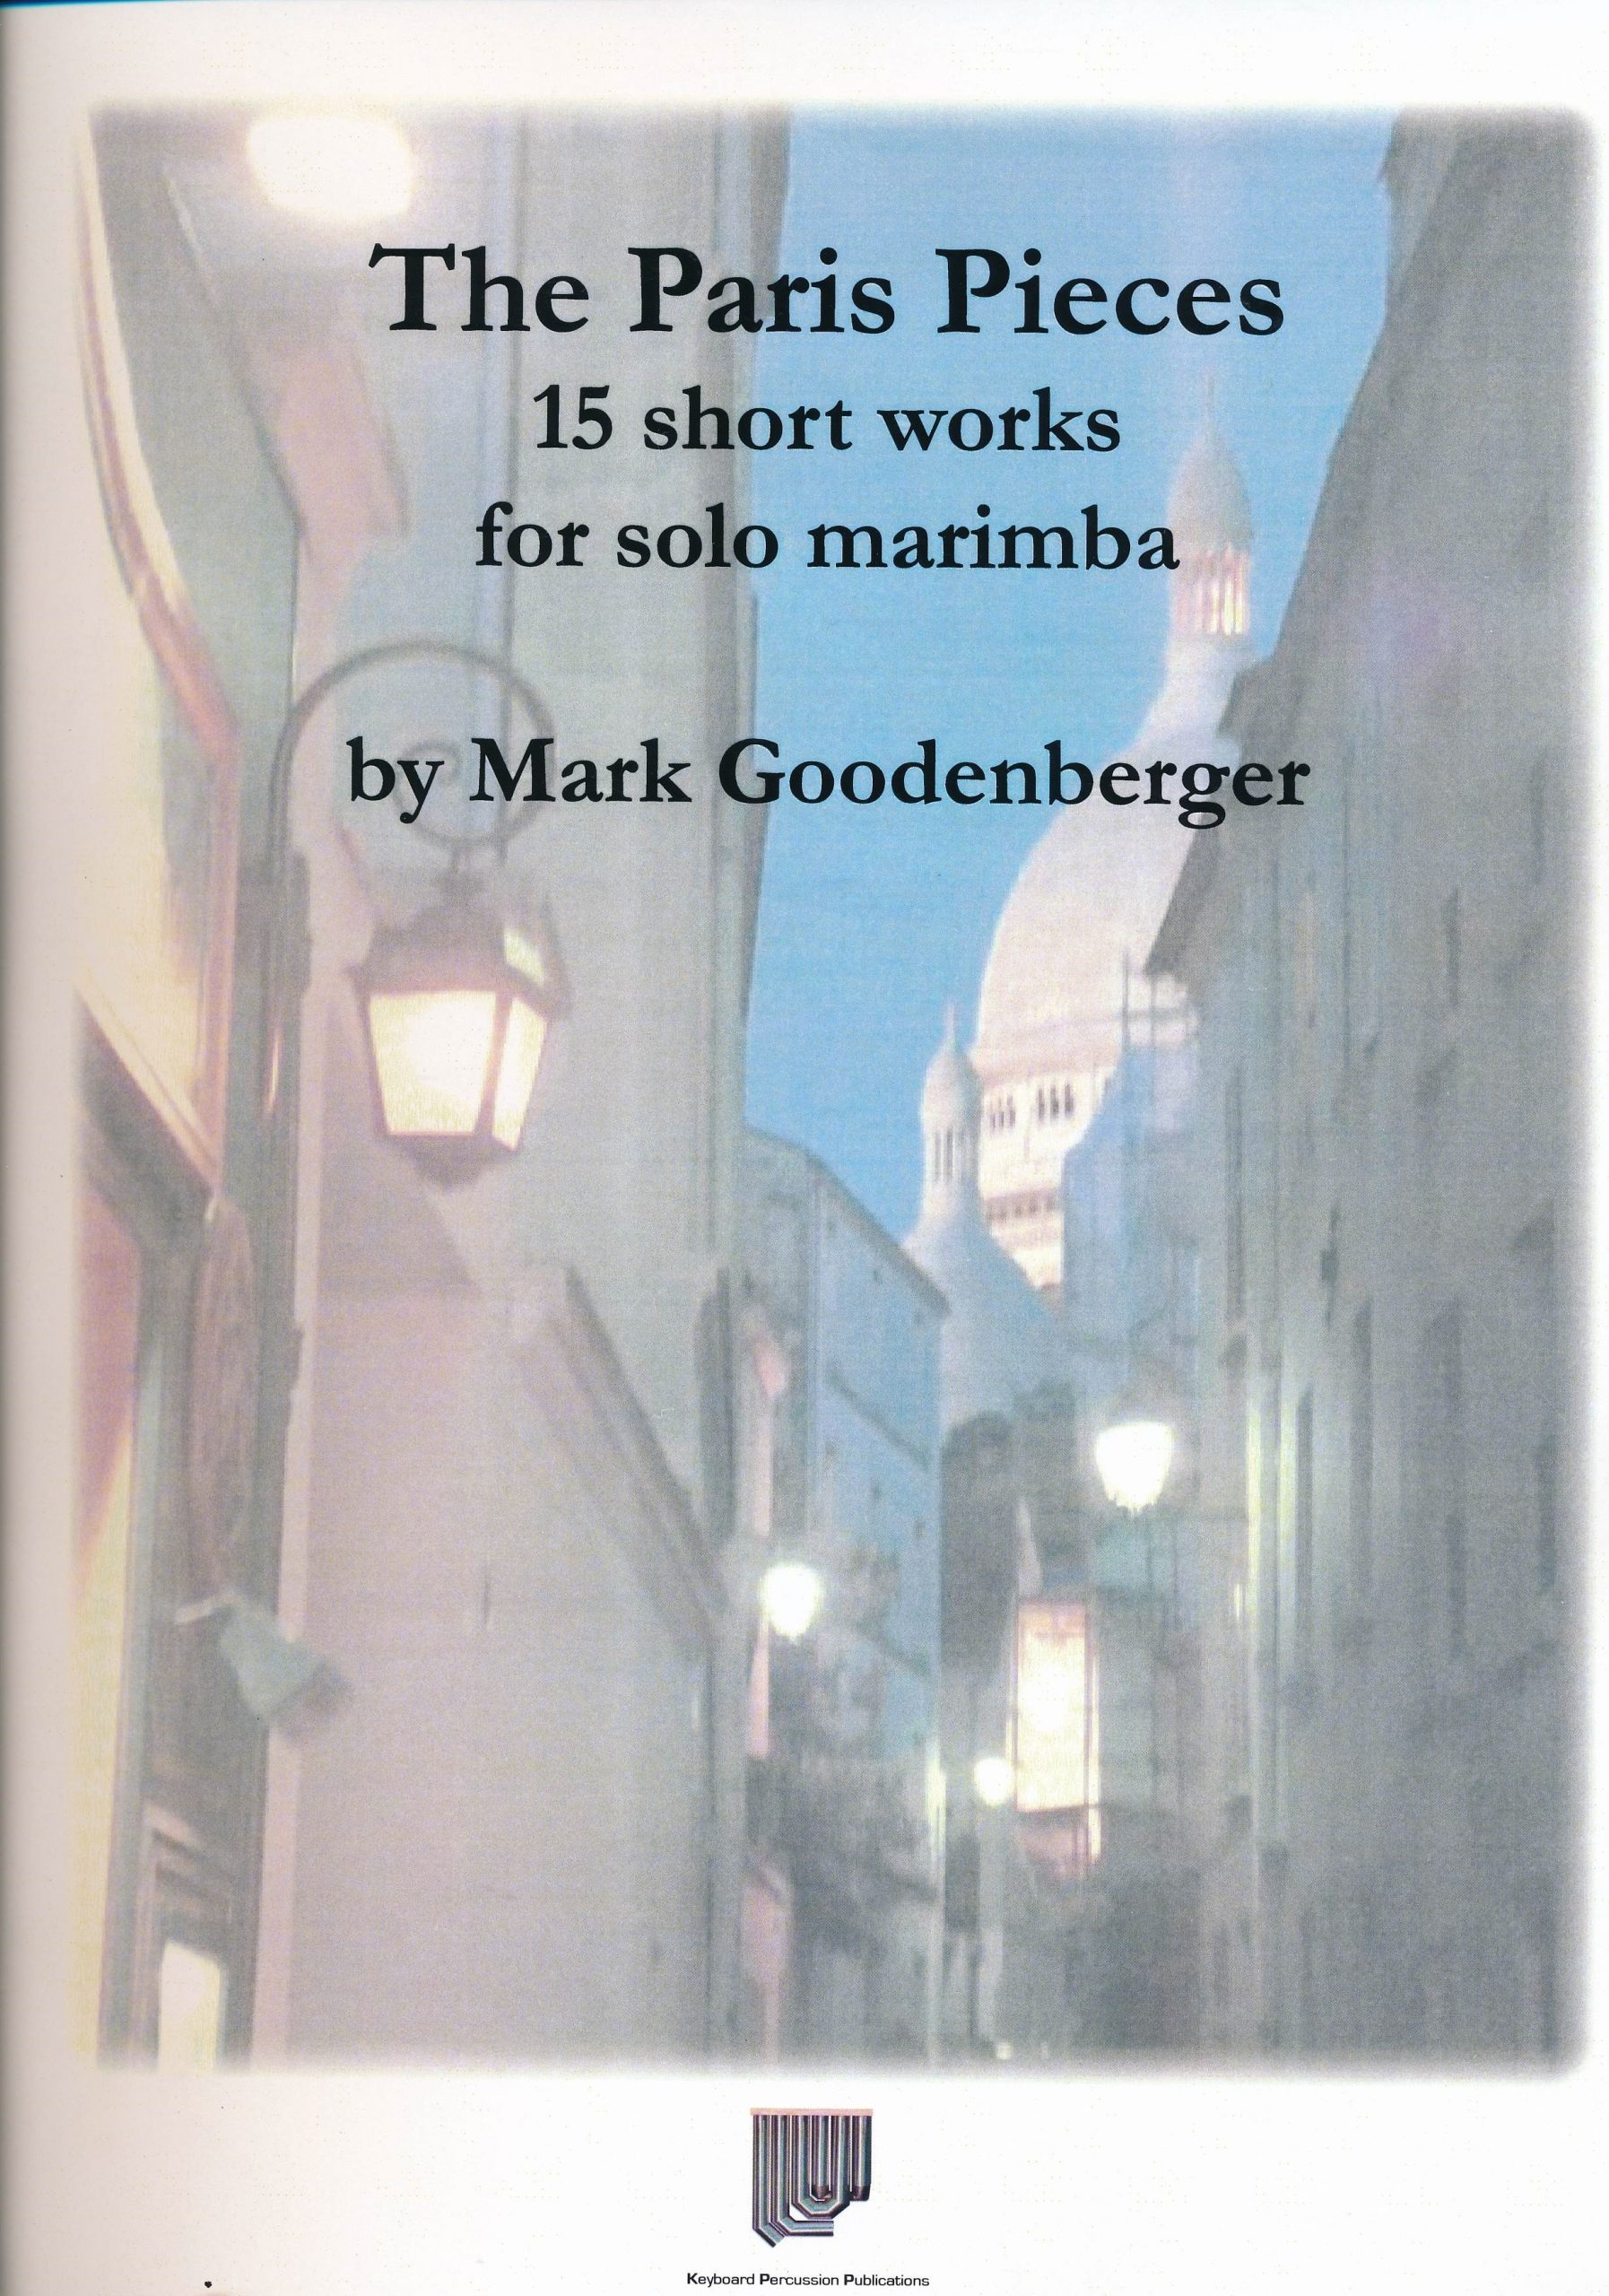 The Paris Pieces by Mark Goodenberger